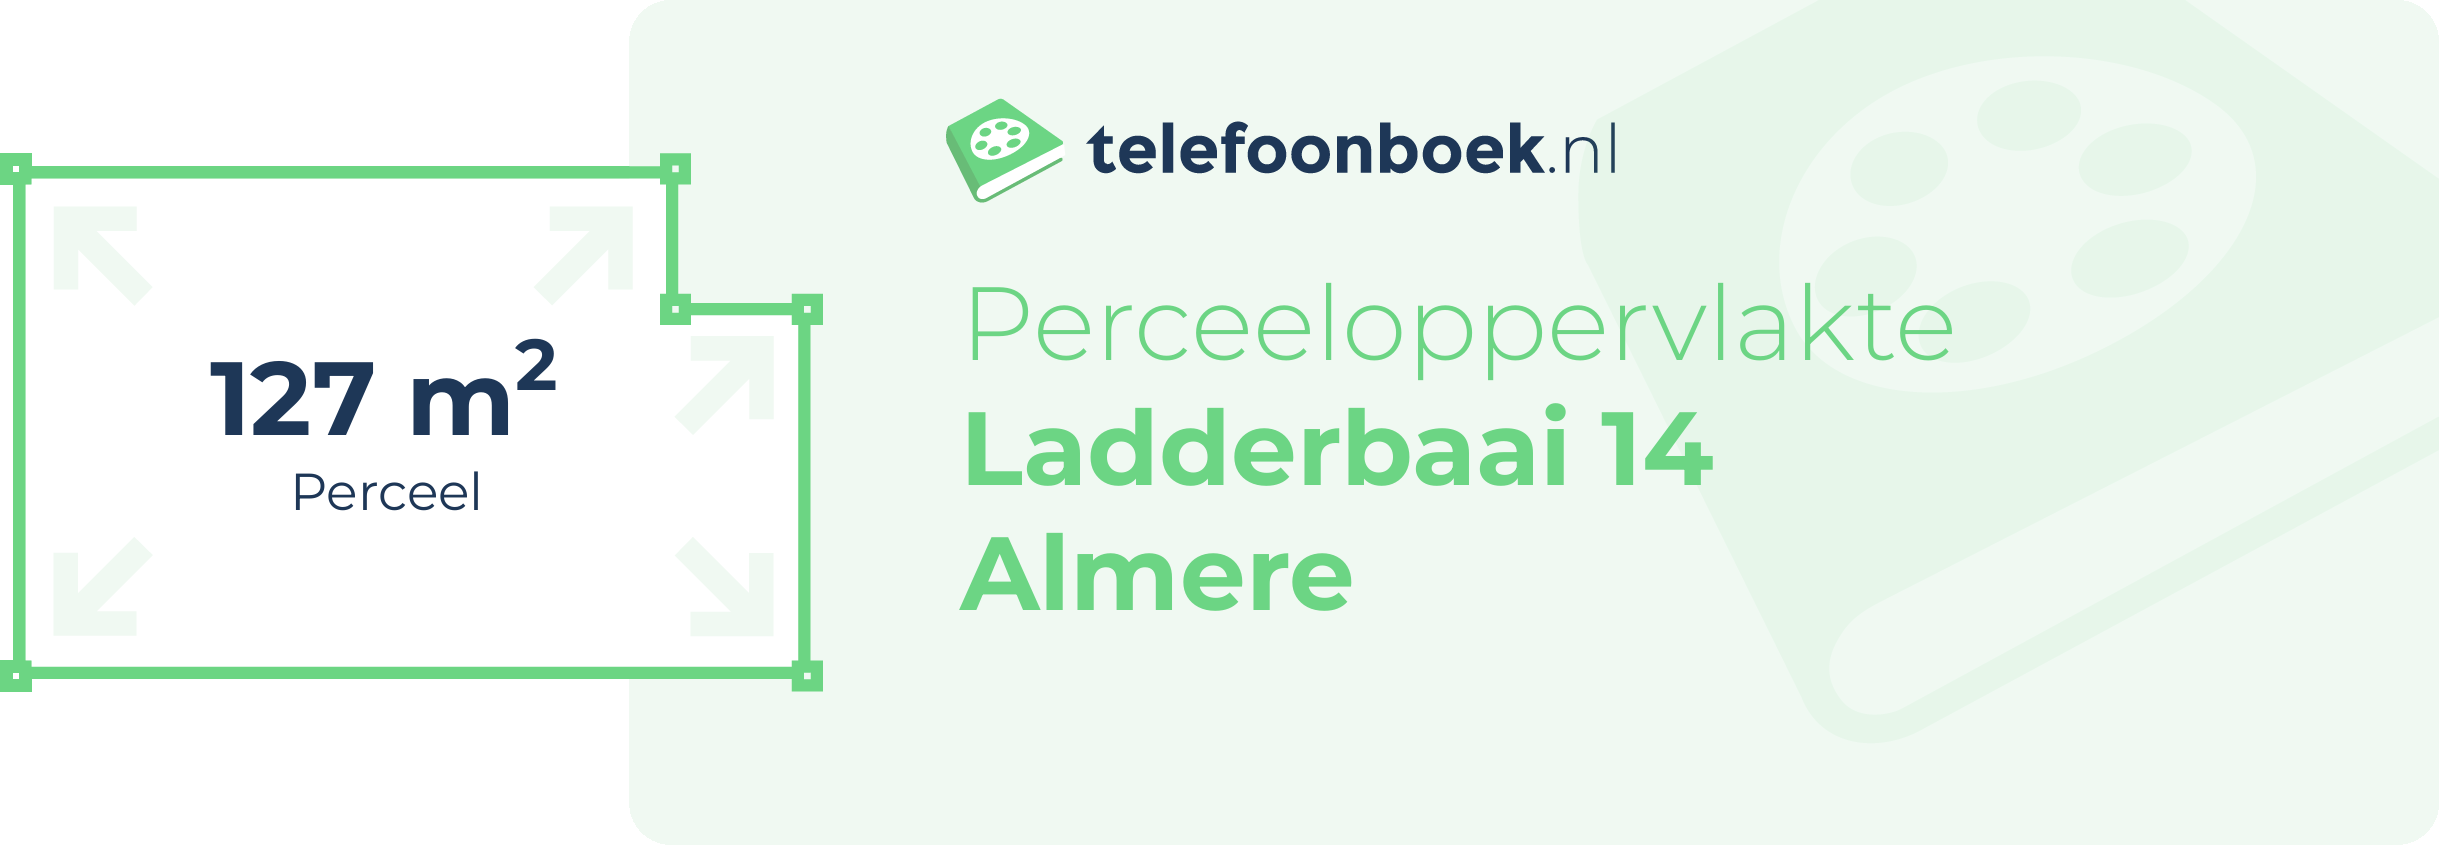 Perceeloppervlakte Ladderbaai 14 Almere